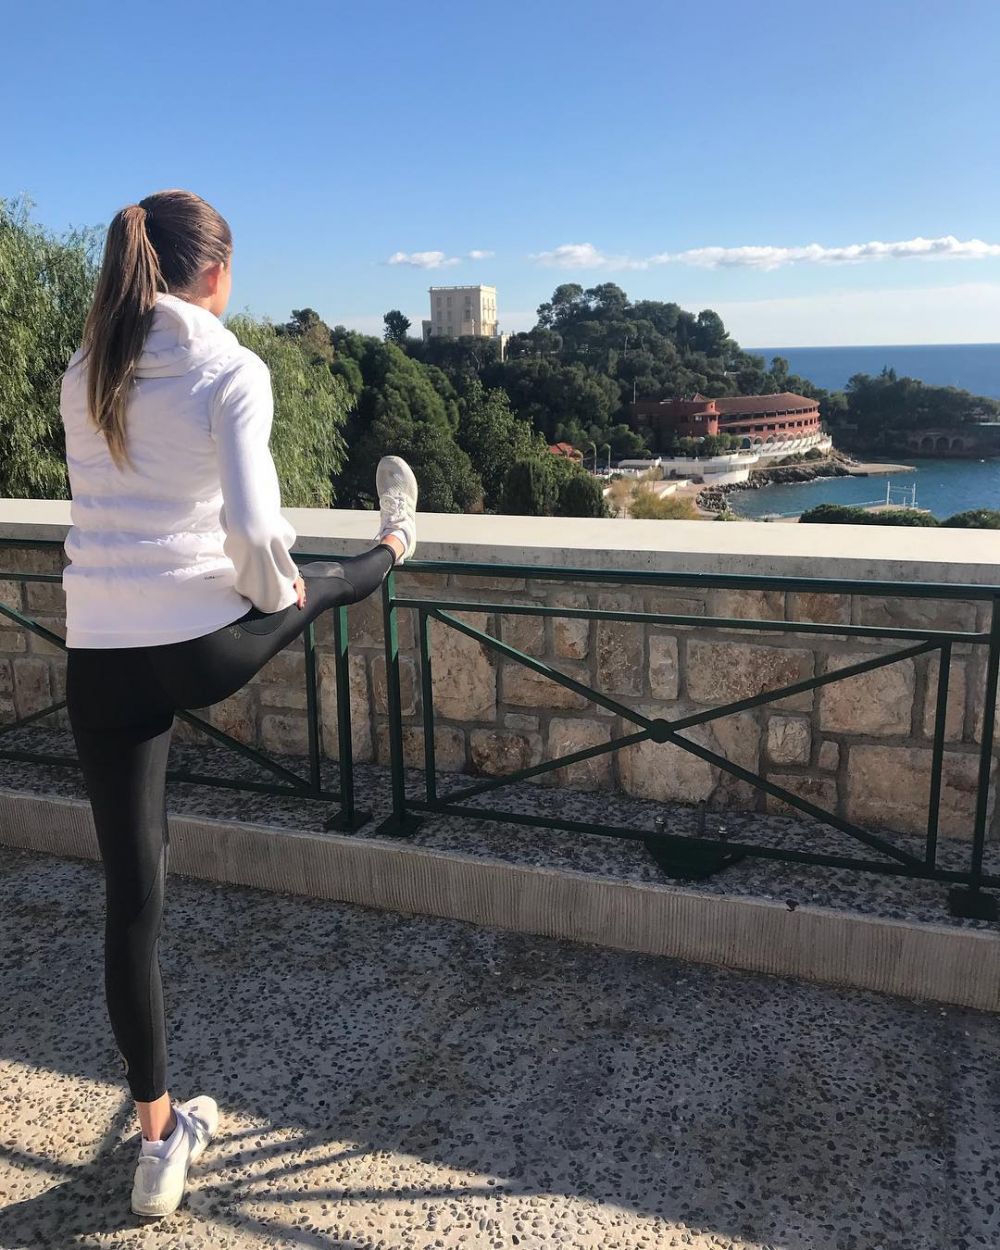 Cum arata Daniela Hantuchova, adversara Simonei Halep in turneul de la Cluj, la 36 de ani: GALERIE FOTO_3